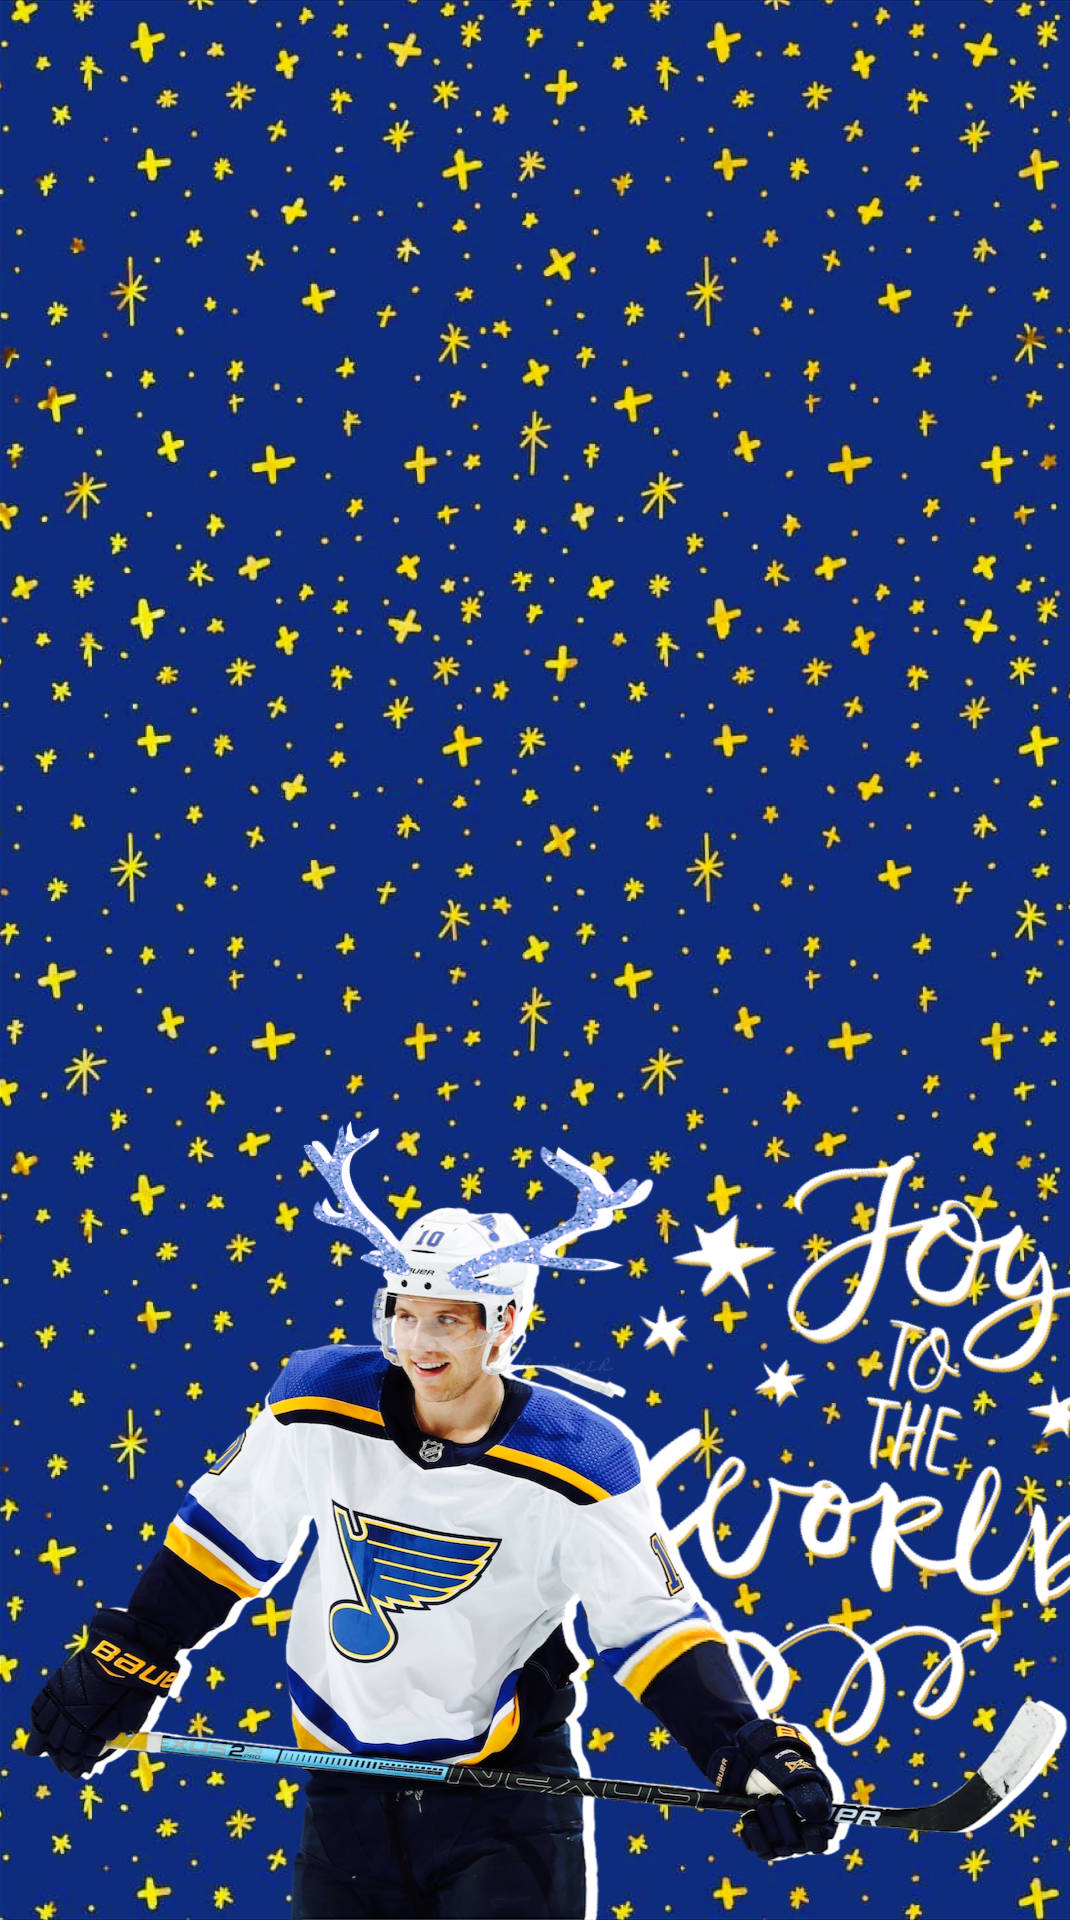 Canadian Ice Hockey Centre Brayden Schenn Christmas Card Wallpaper